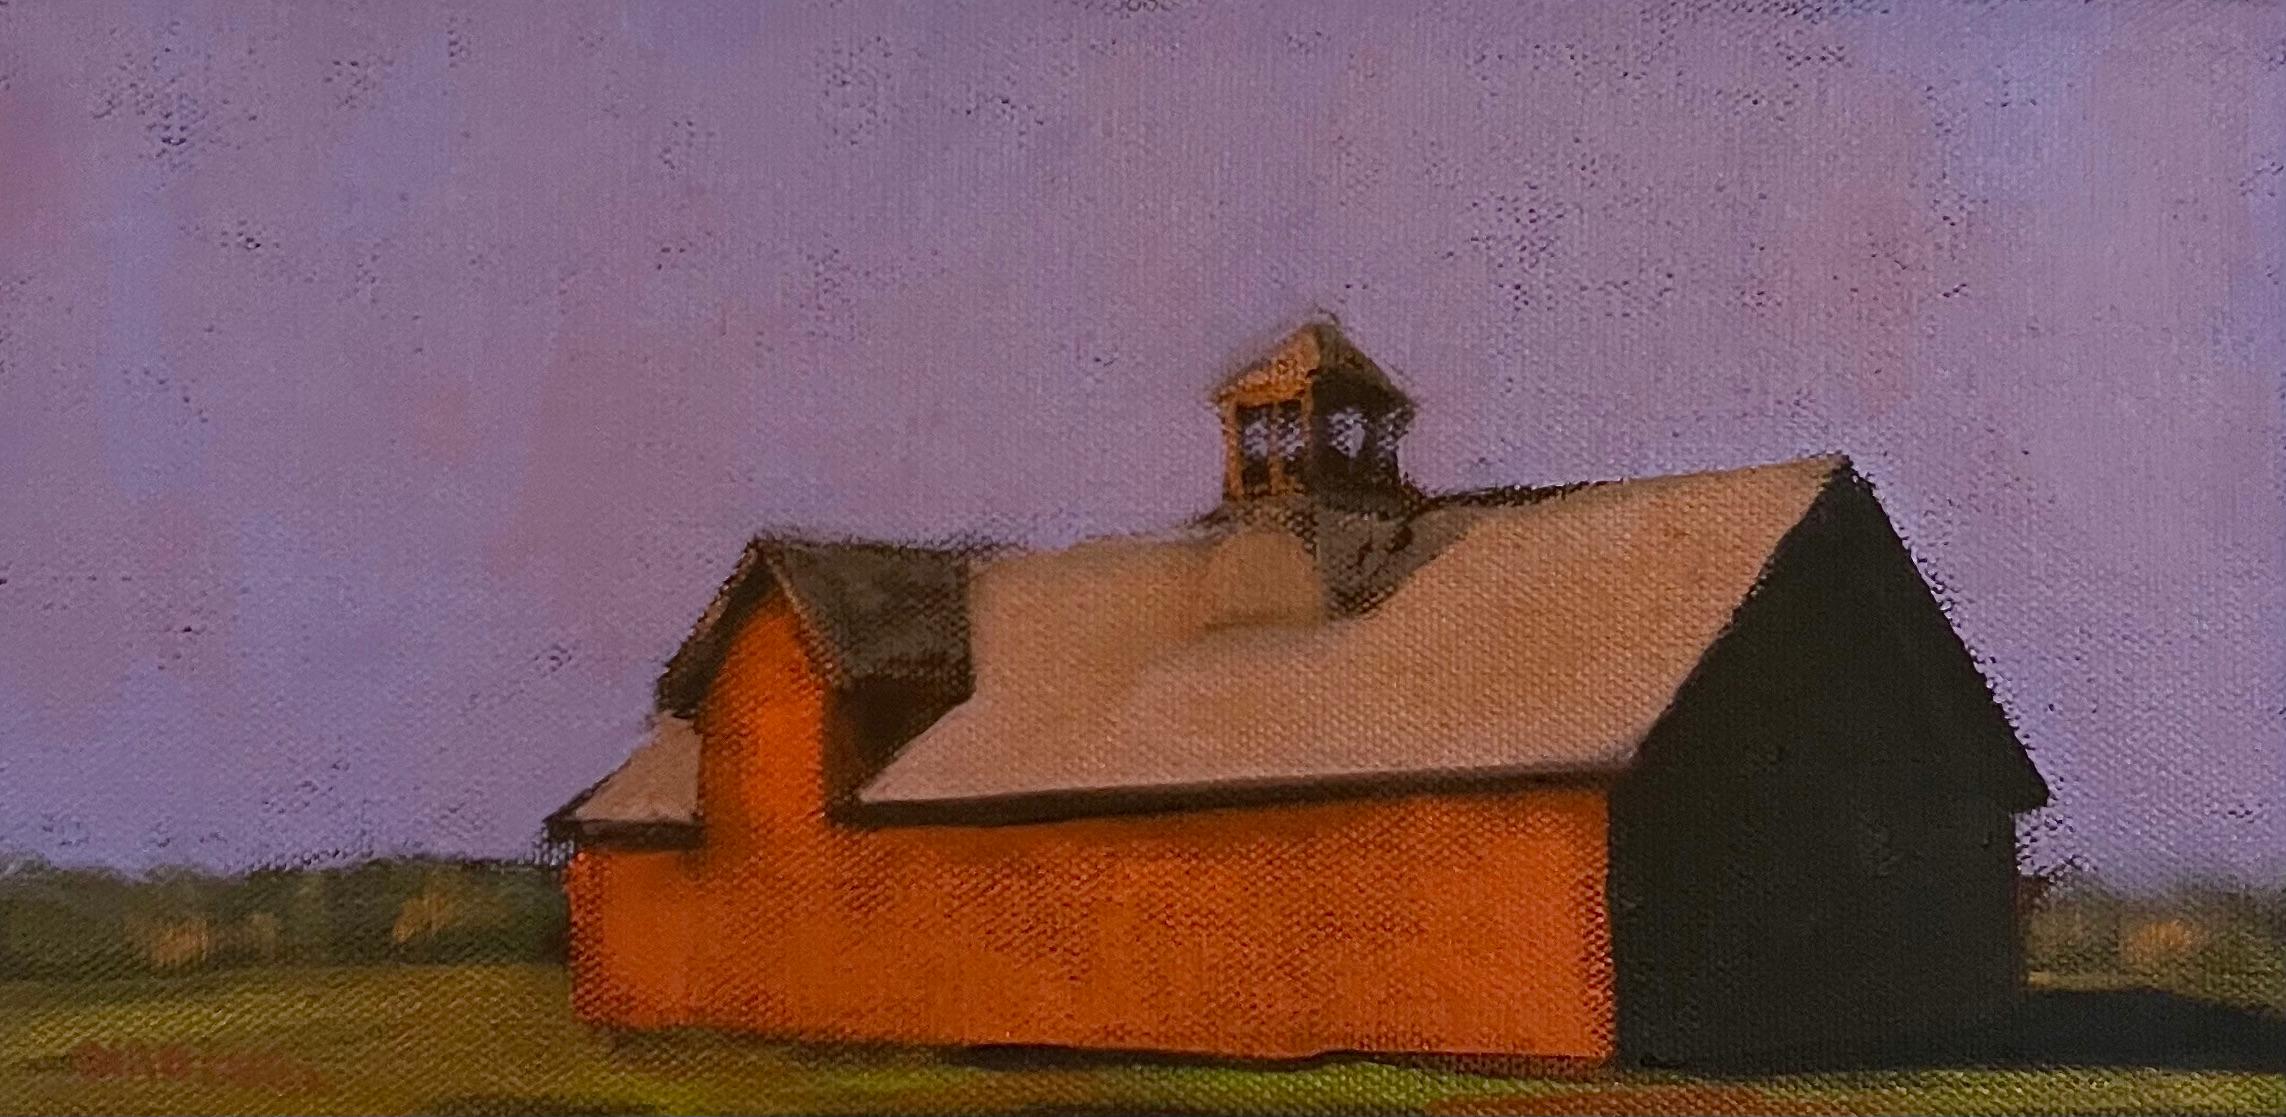 Robert Cardinal Landscape Painting - Red Barn